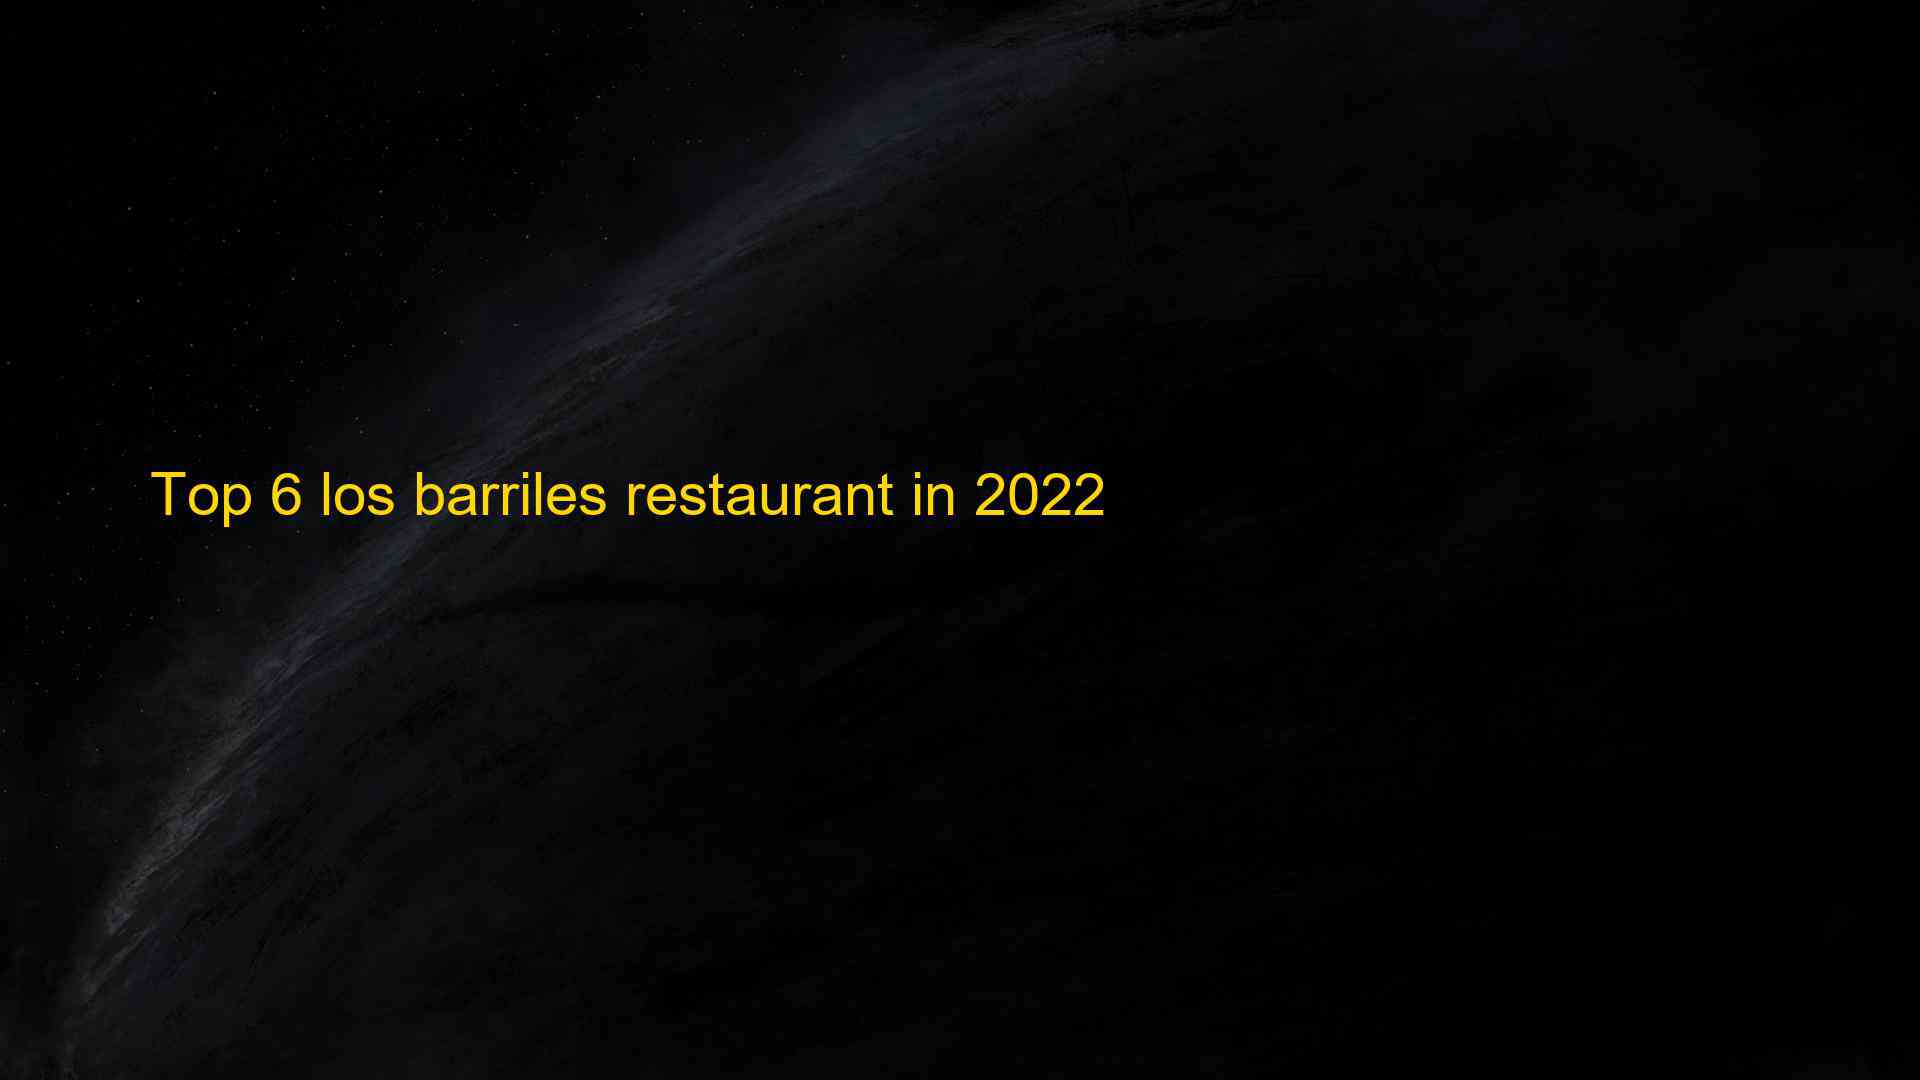 Top 6 los barriles restaurant in 2022 1663338603